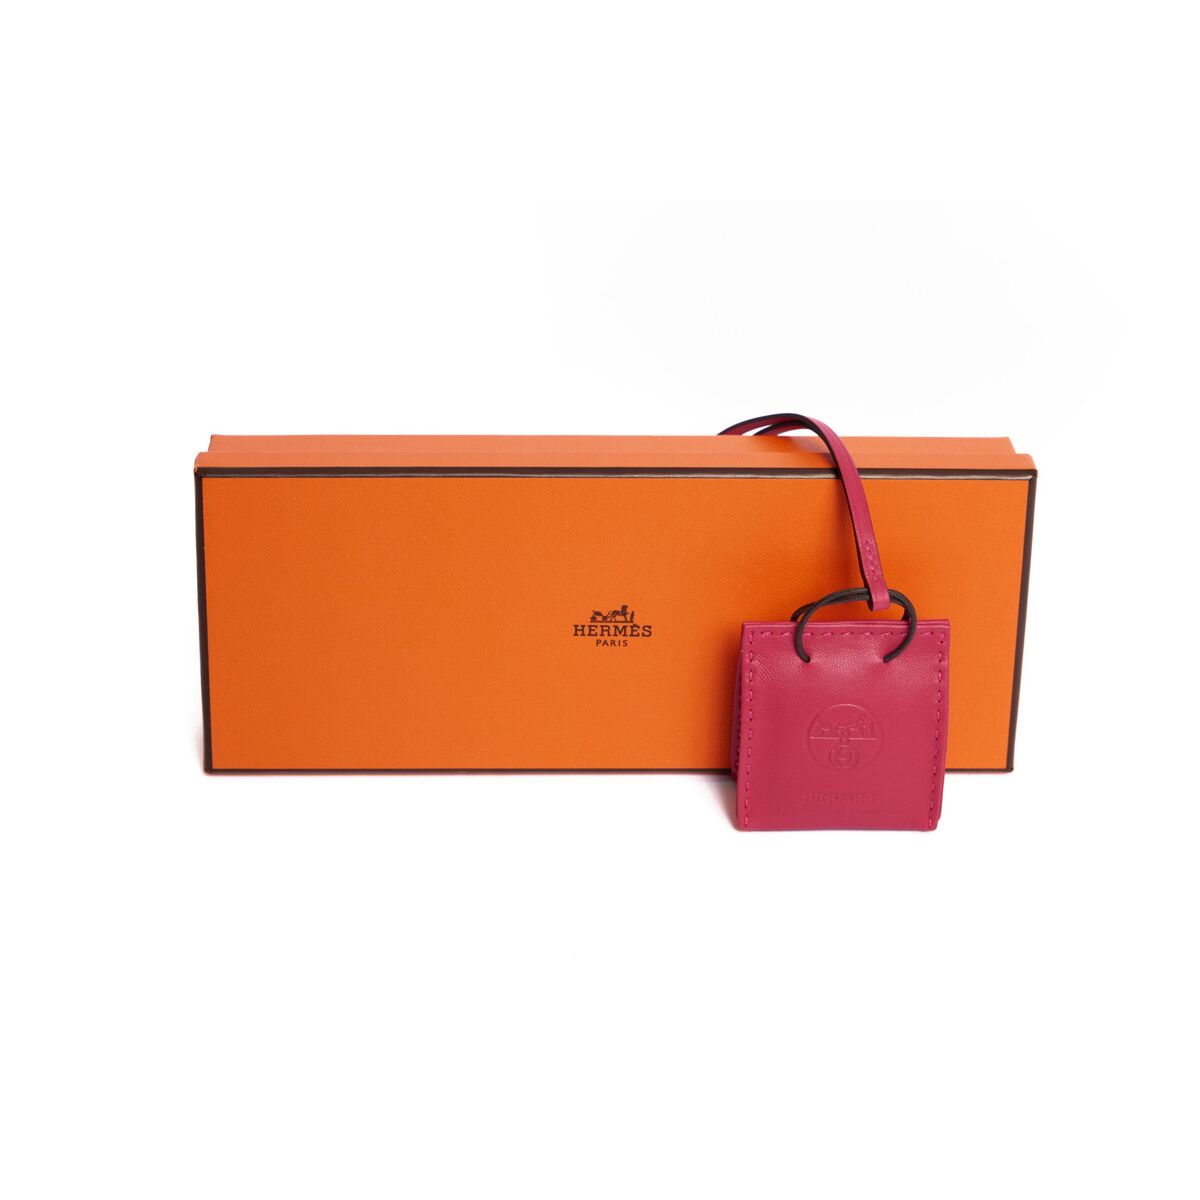 Hermes Rose Orange Bag Charm